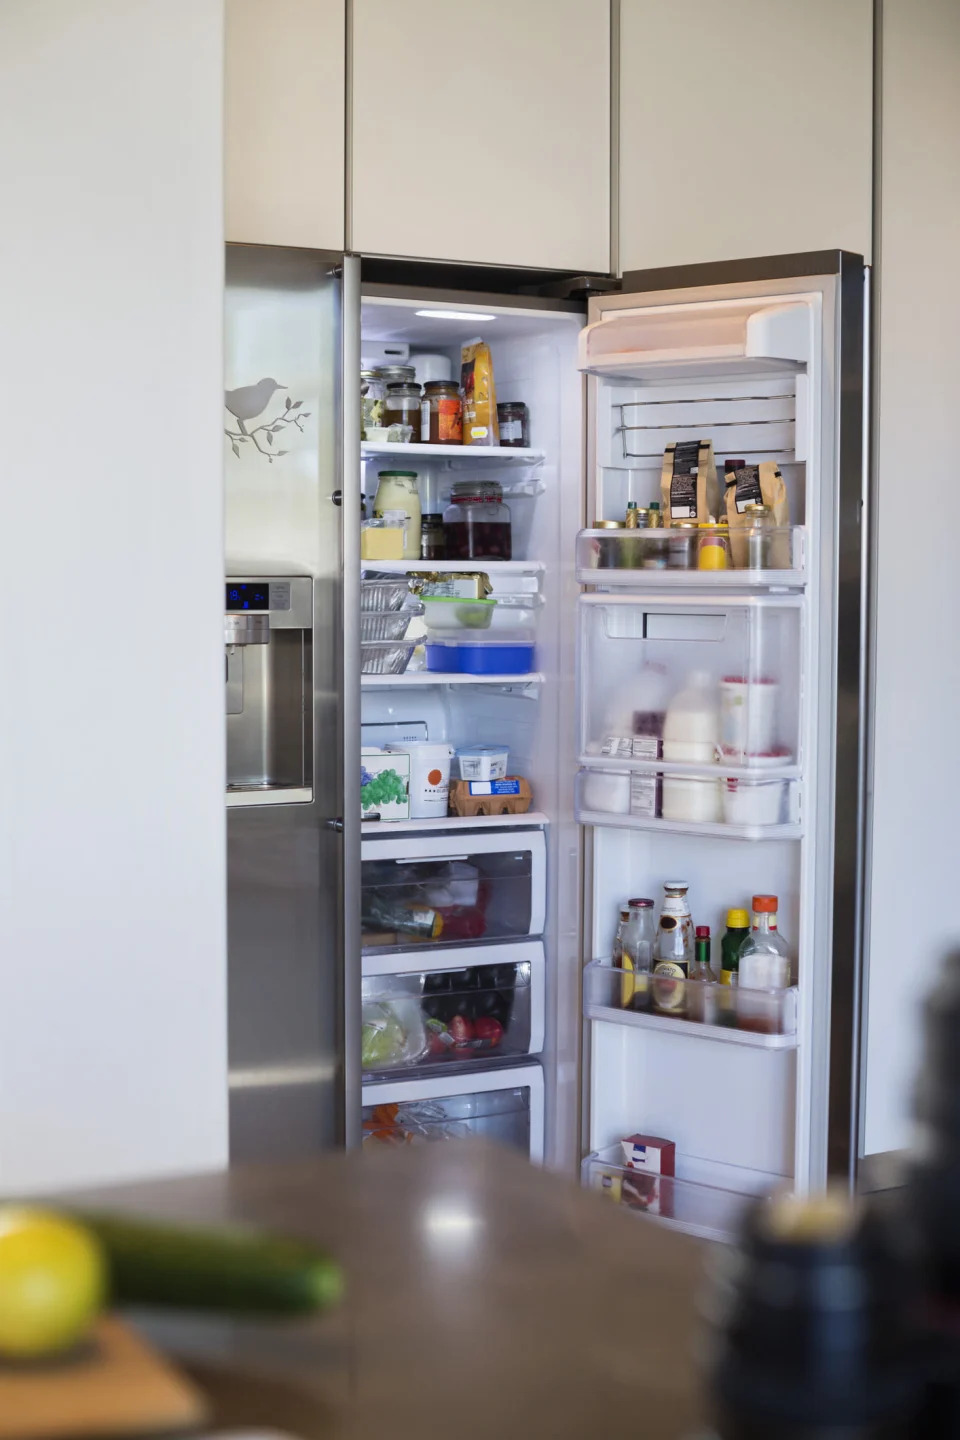 A full-sized refrigerator.